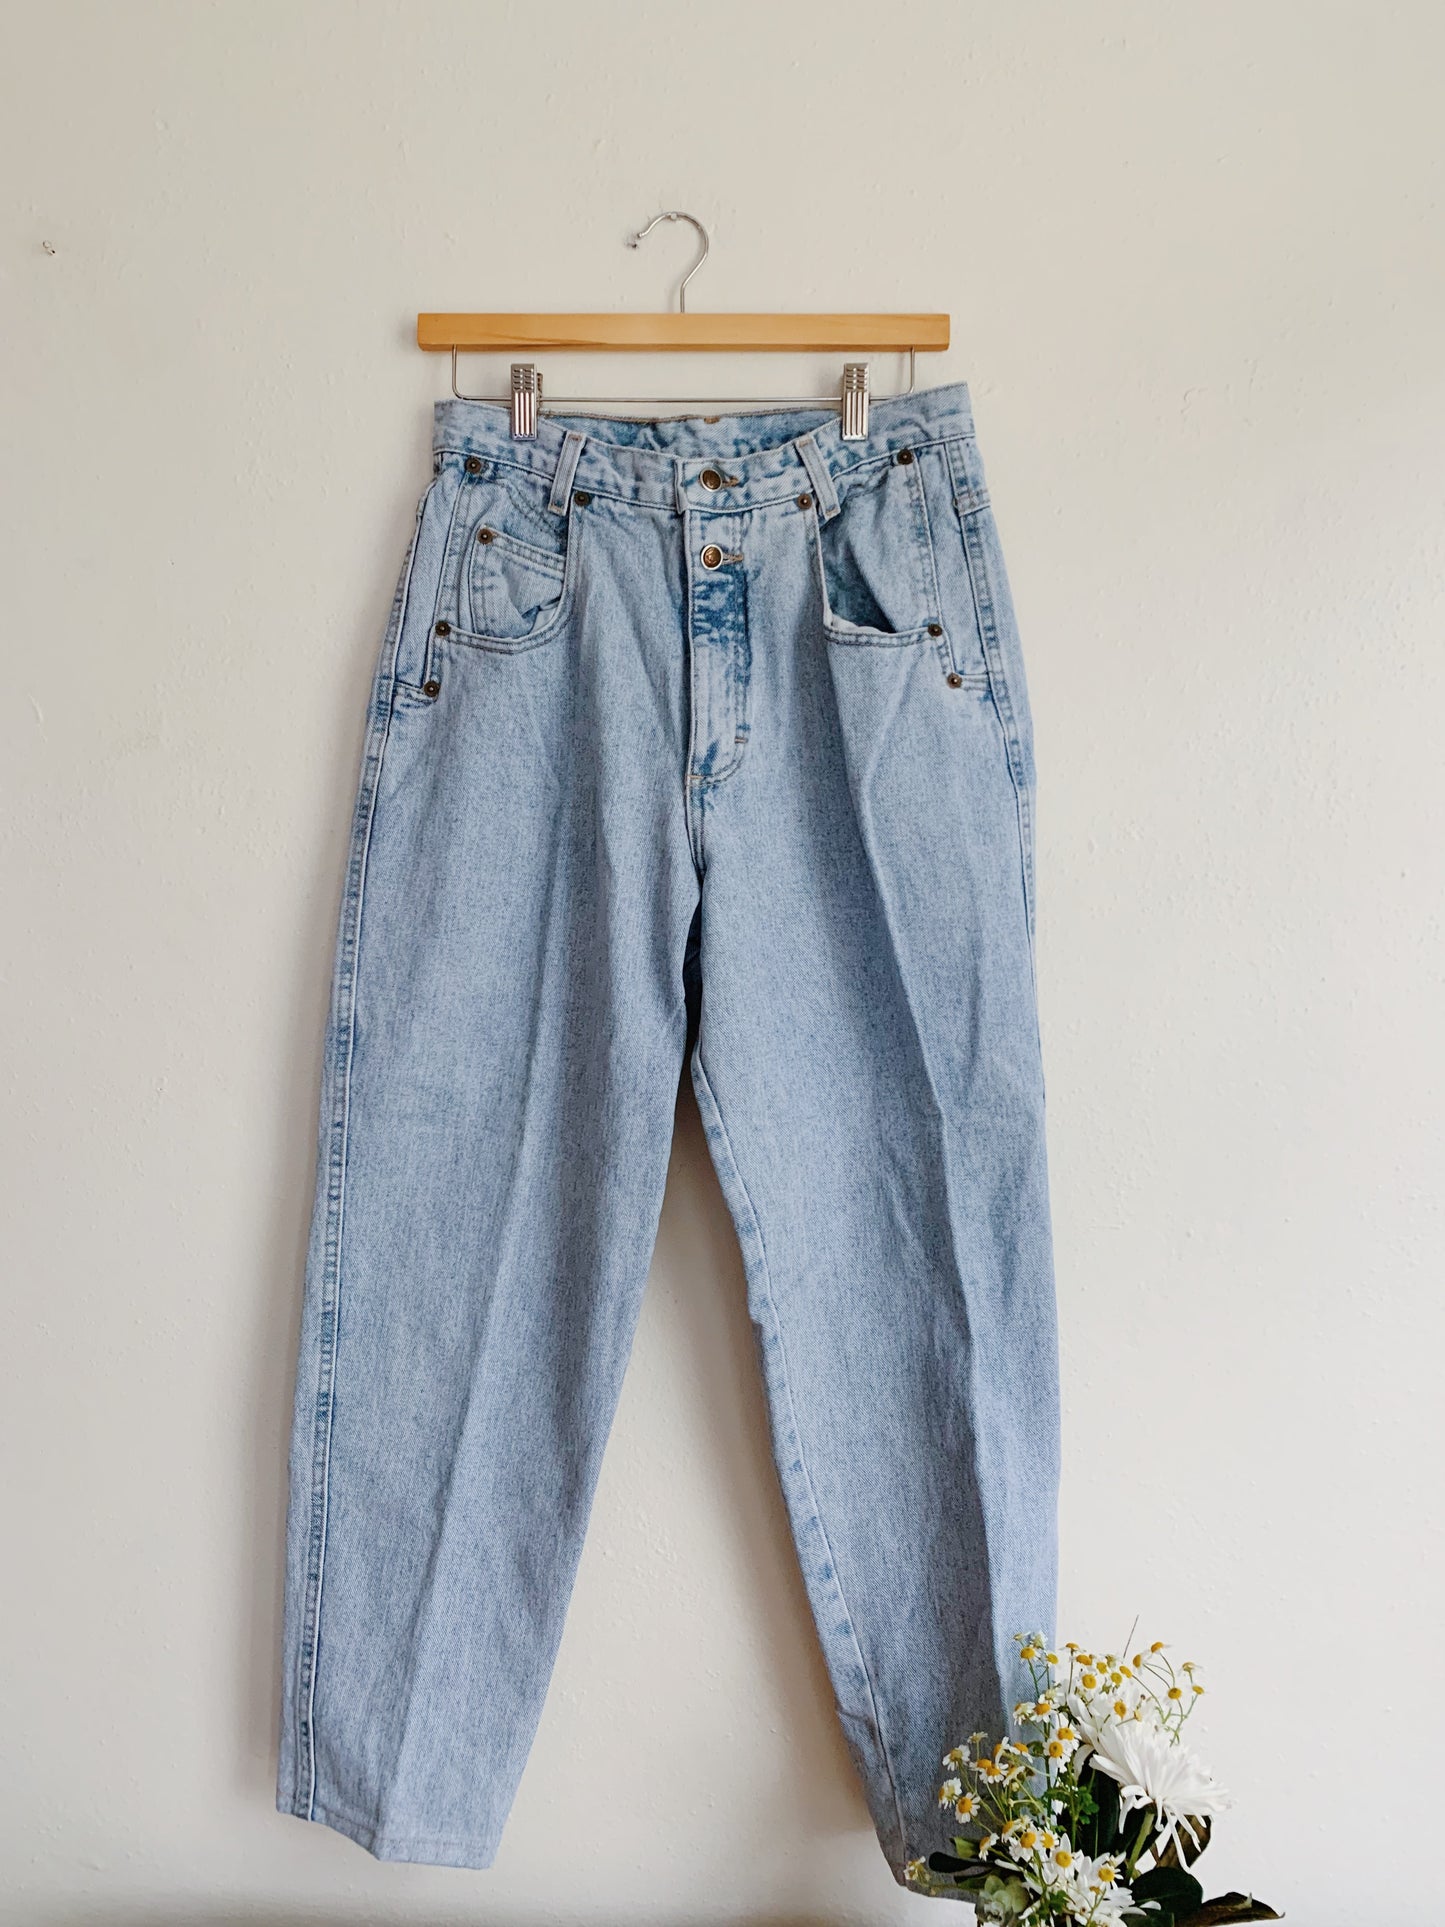 Vintage Zena Jeans (30x26.5)